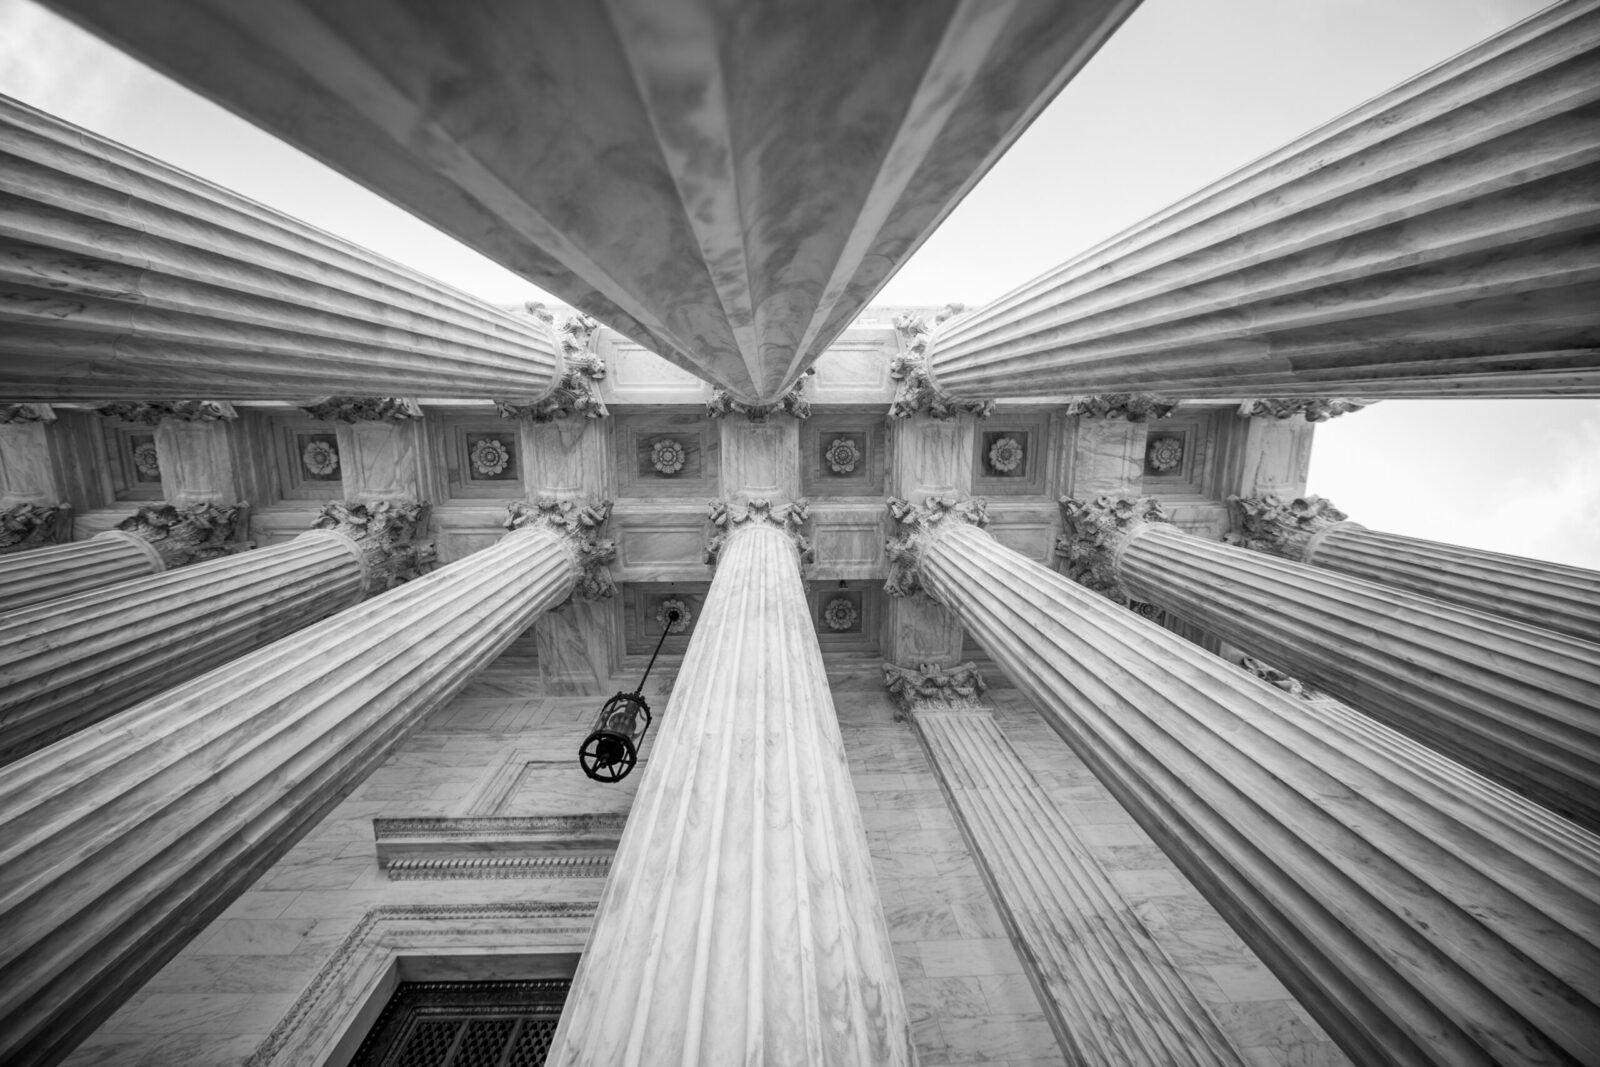 Columns - U.S. Supreme Court